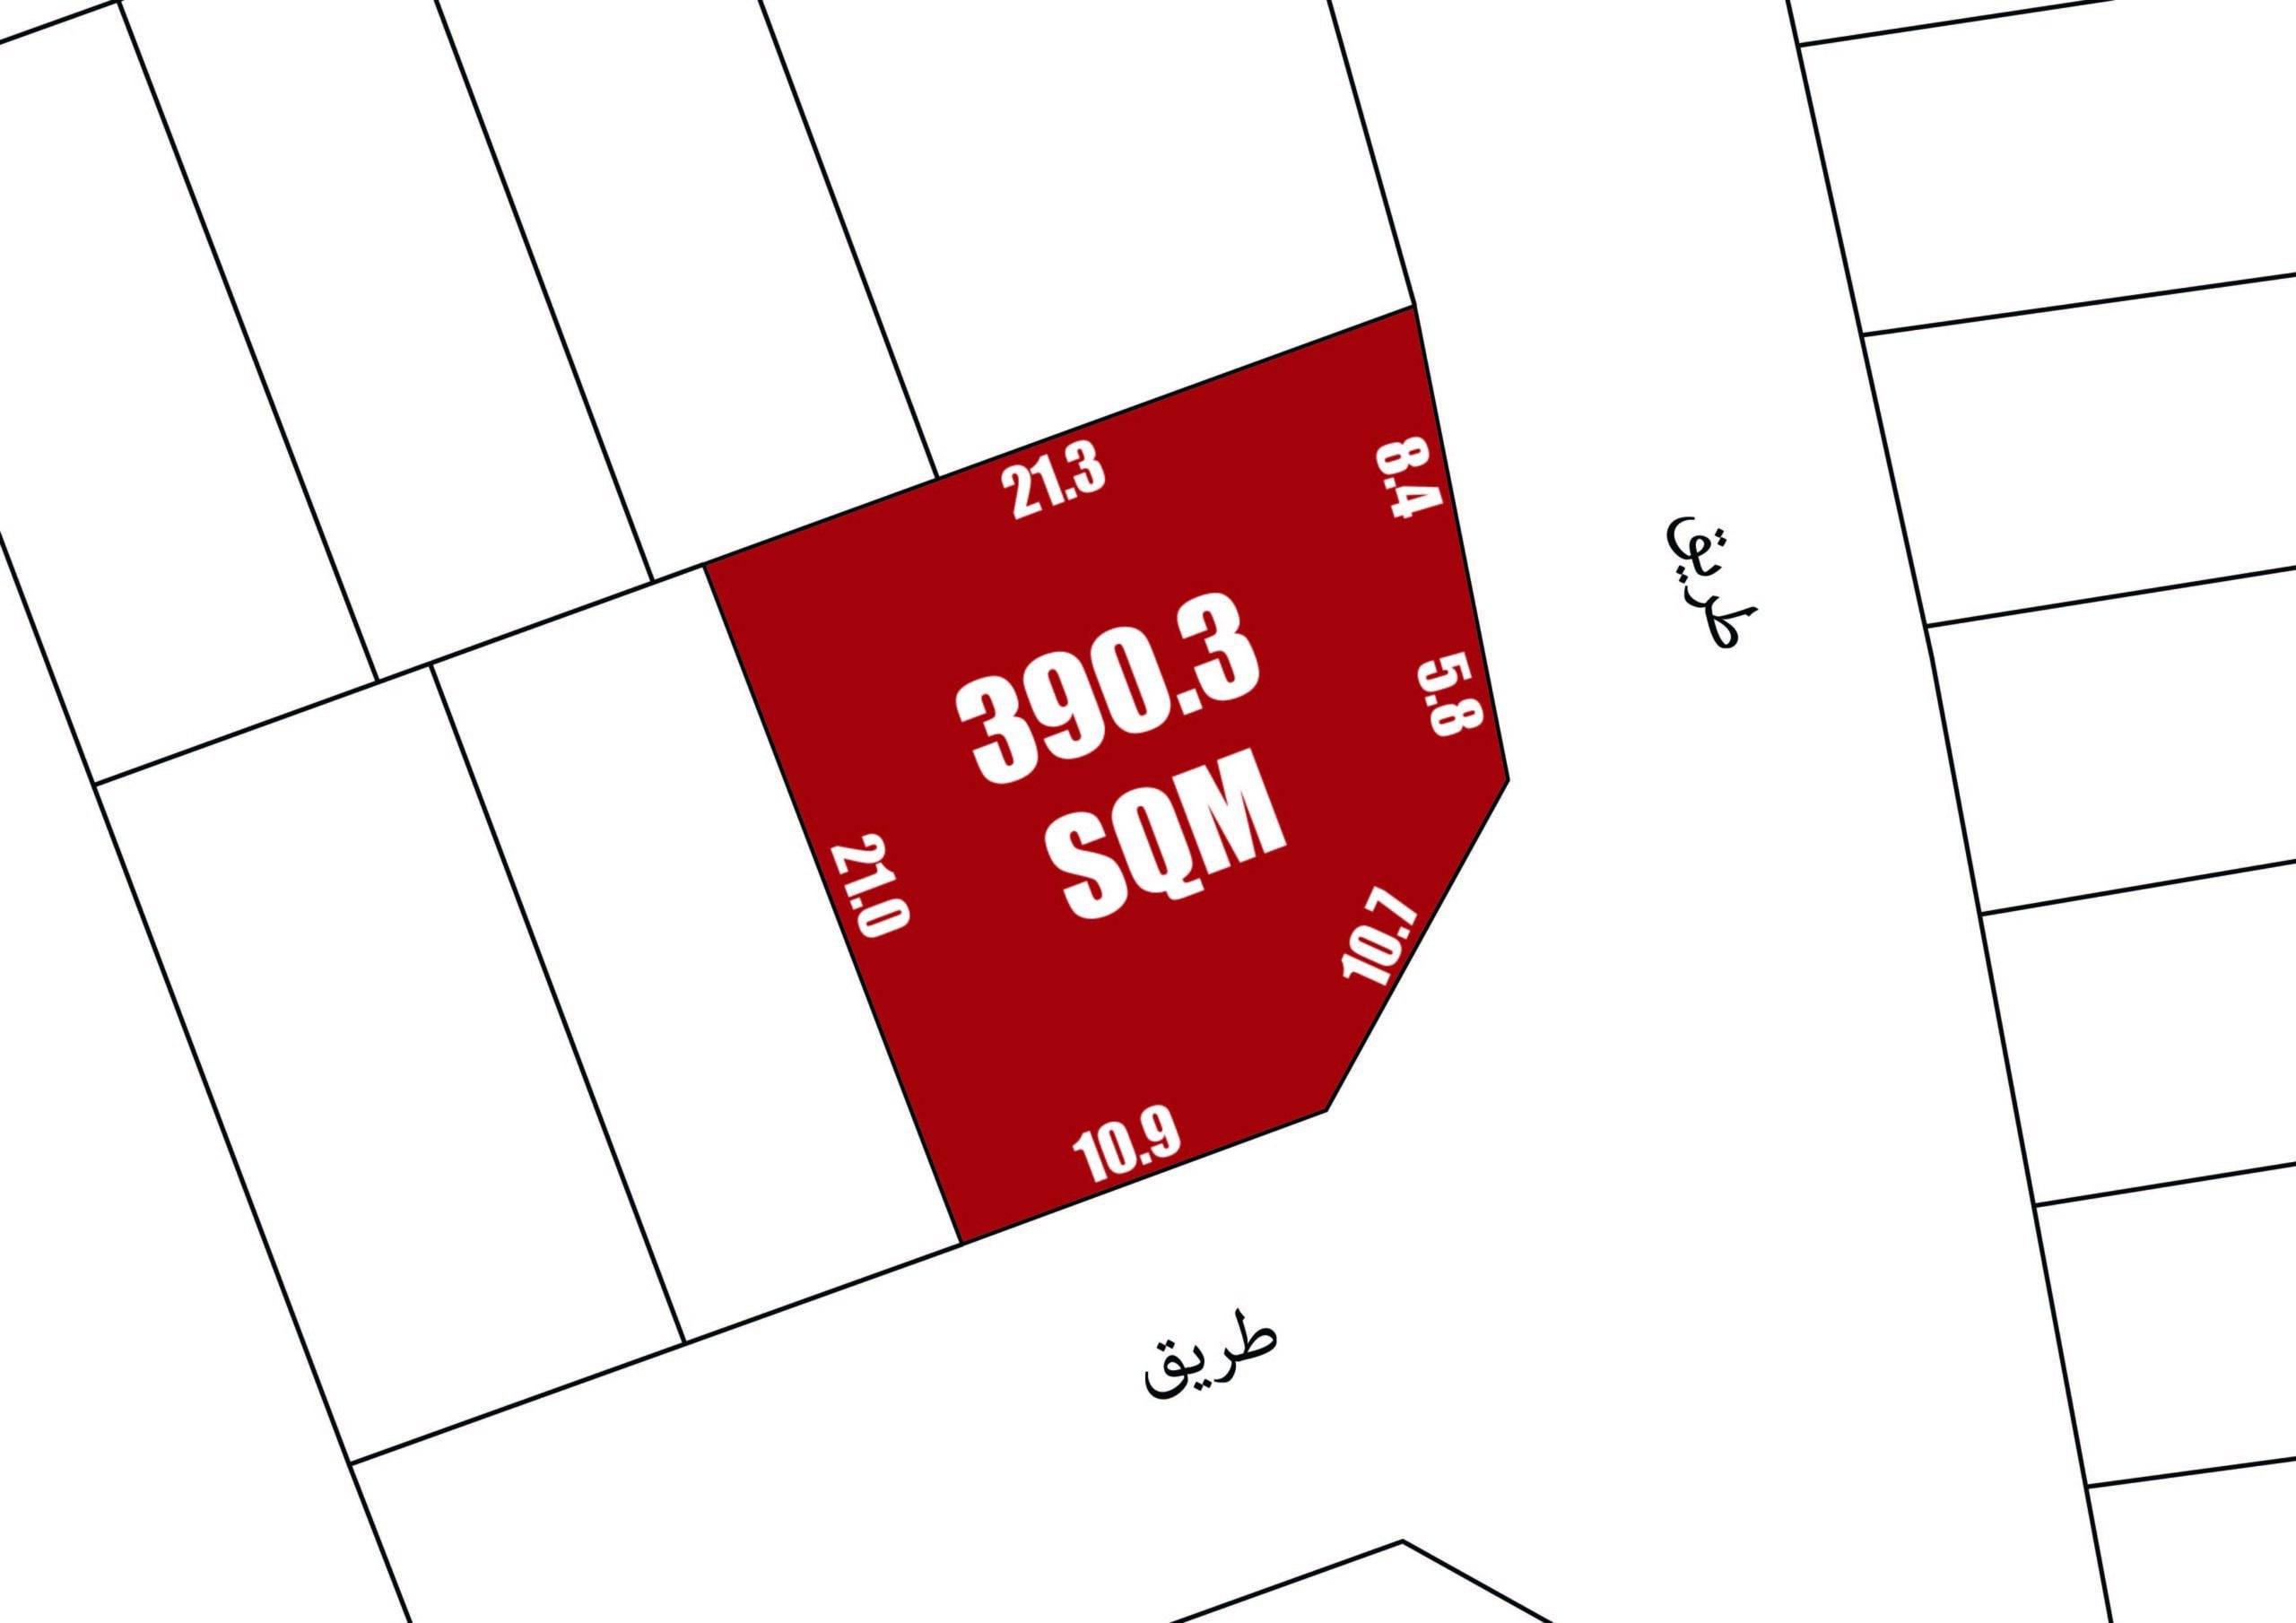 RHA Land for Sale in Hamala | 390.3 SQM